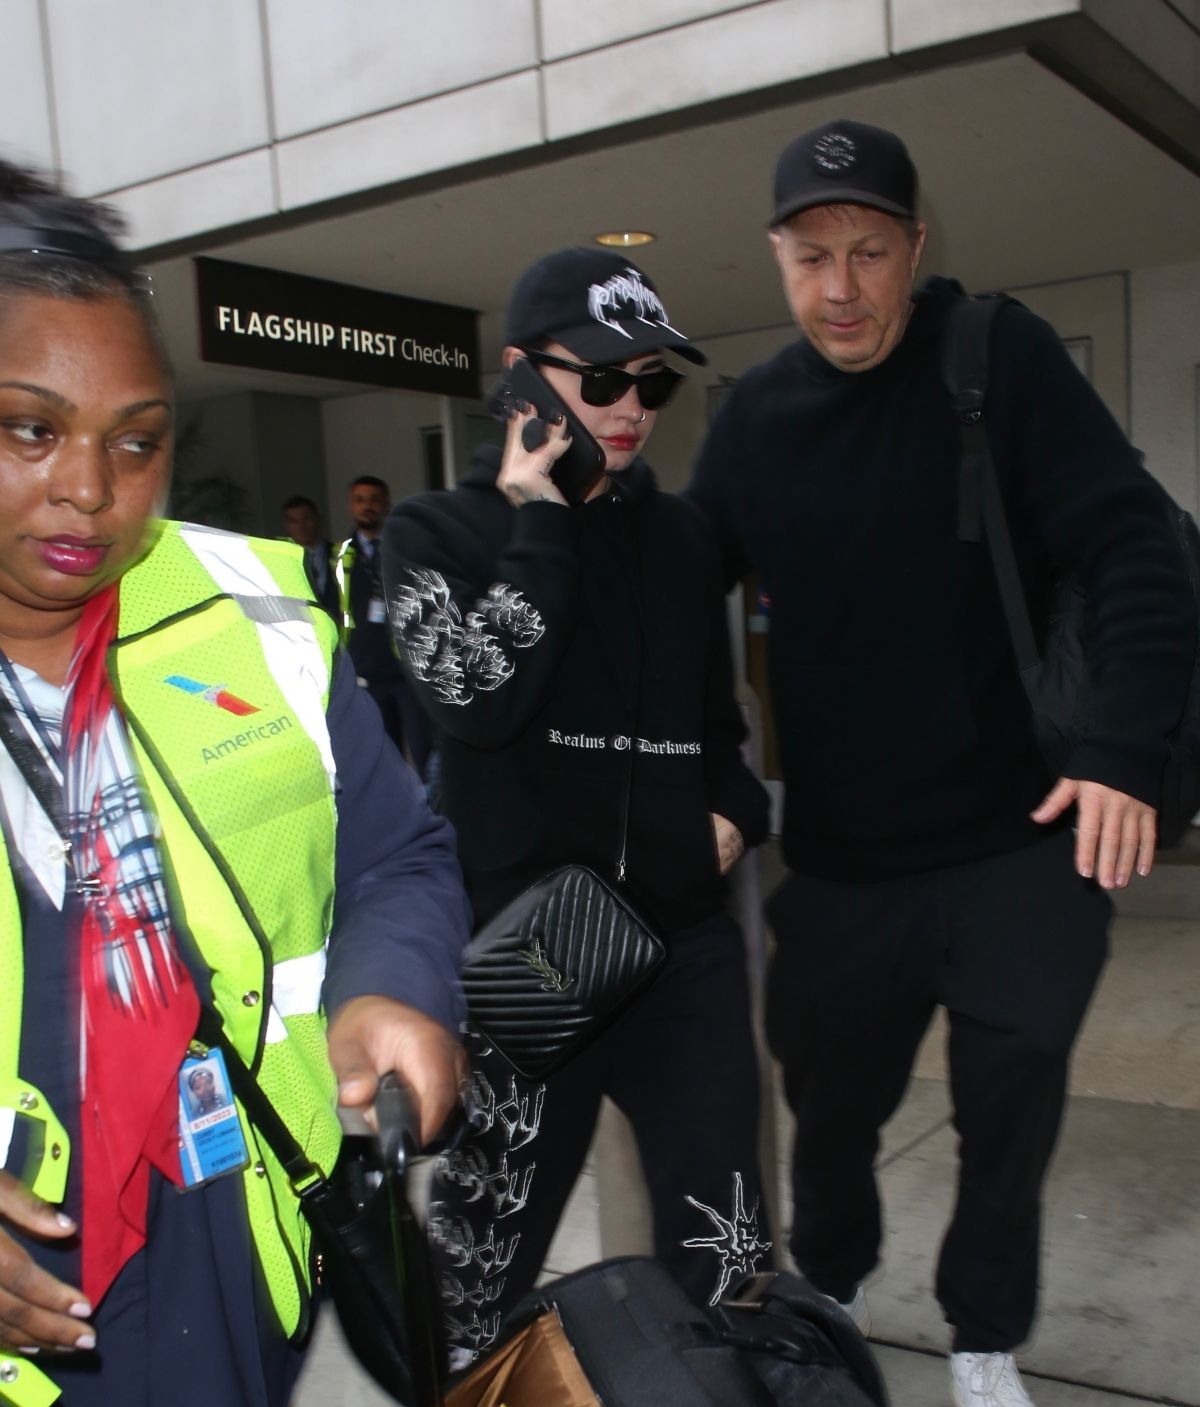 Demi Lovato LAX Airport in Los Angeles April 1, 2011 – Star Style